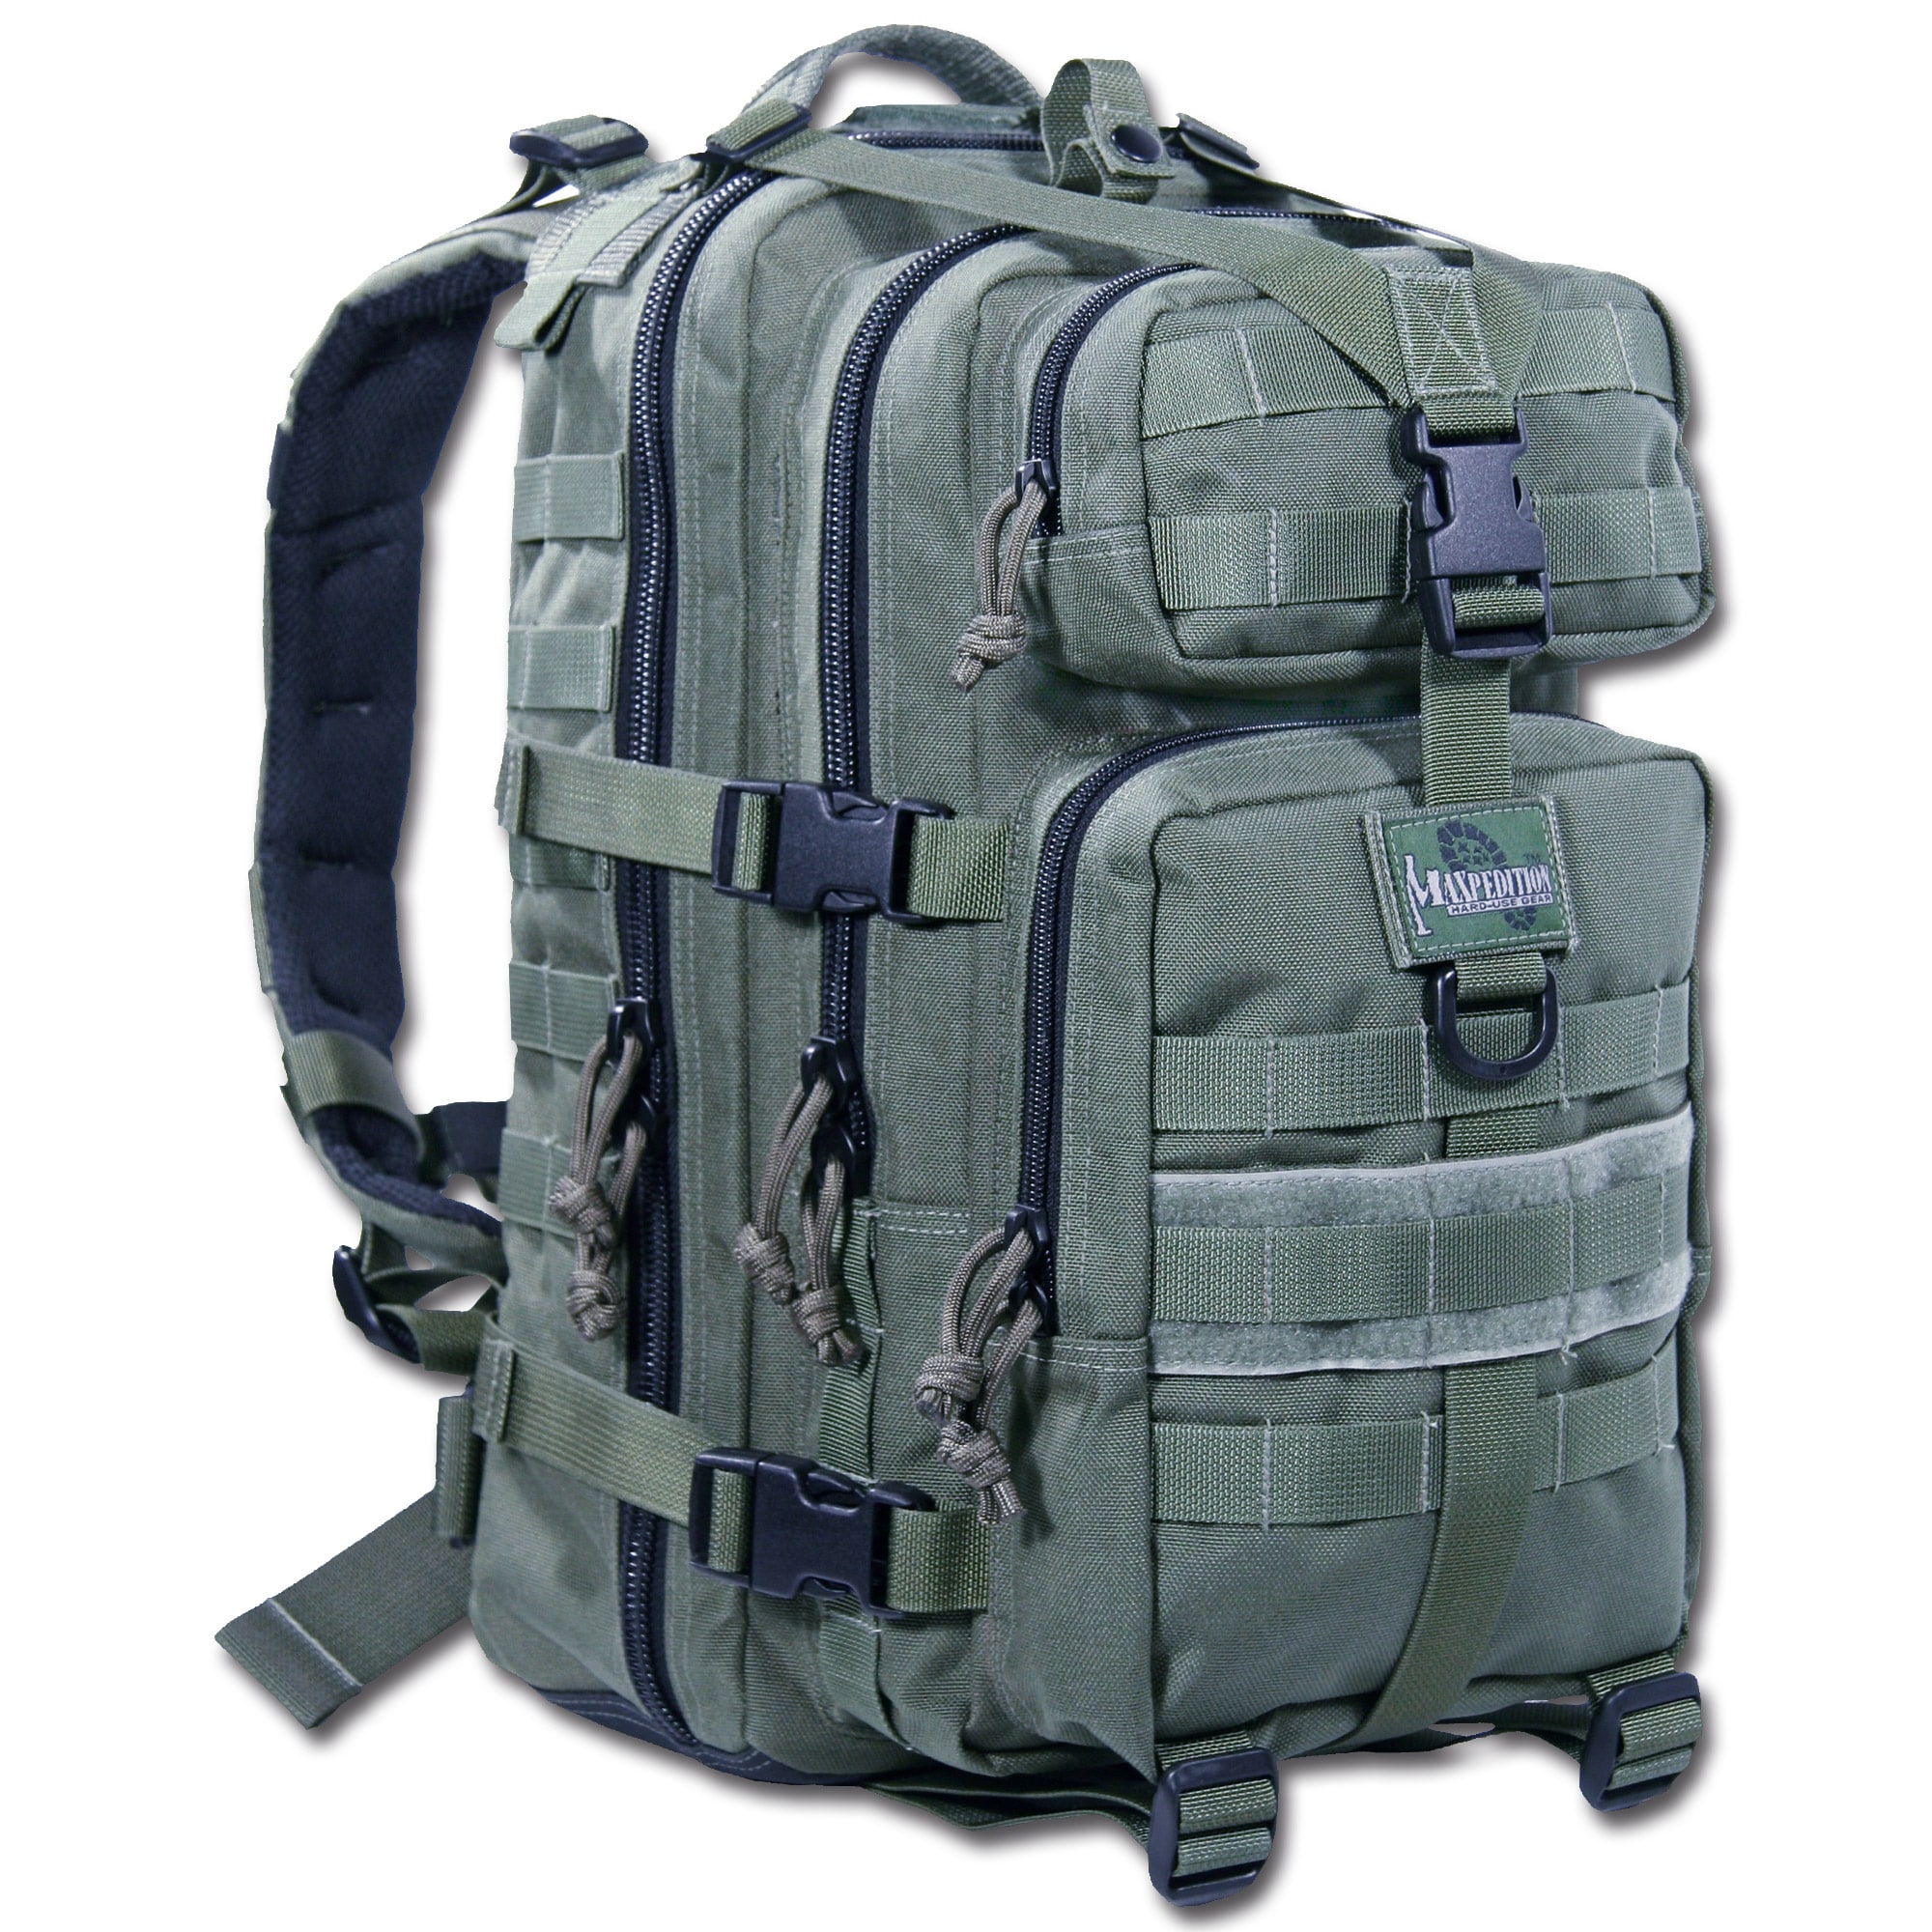 Backpack Maxpedition II foliage | Backpack Maxpedition Falcon II foliage | Backpacks | Backpacks | Transport